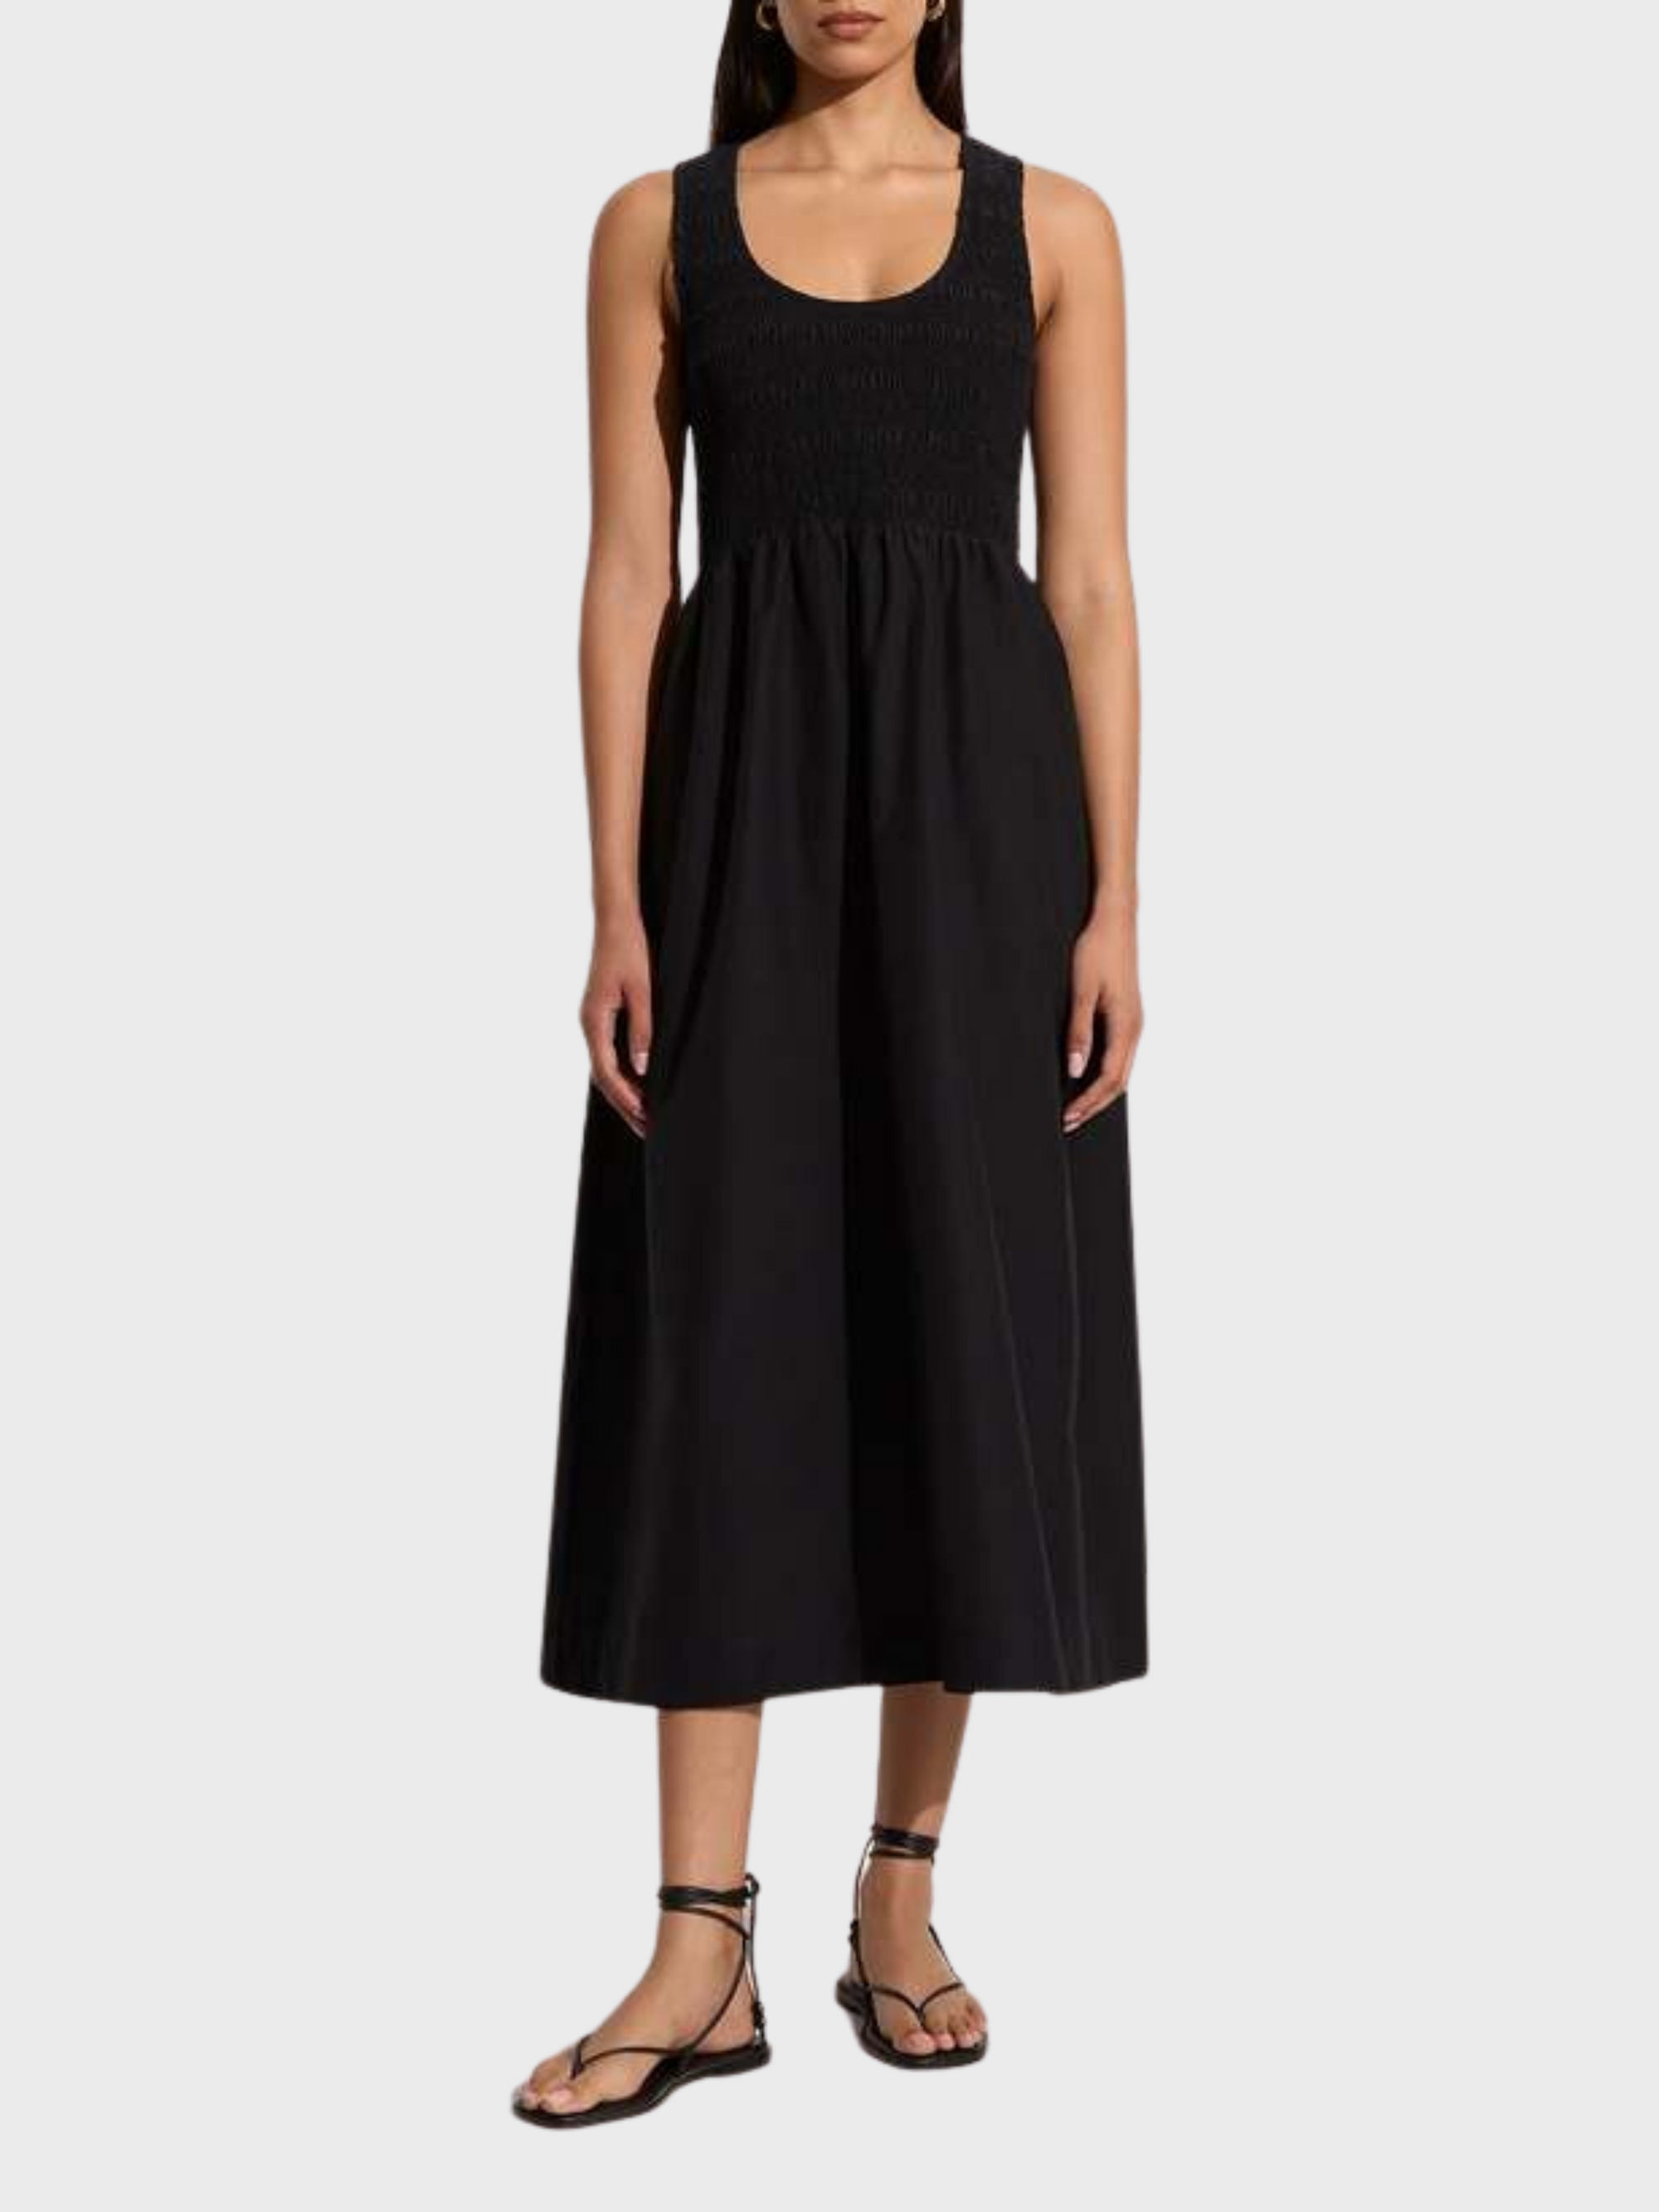 Faithfull Matera Midi Dress Black-Dresses-West of Woodward Boutique-Vancouver-Canada